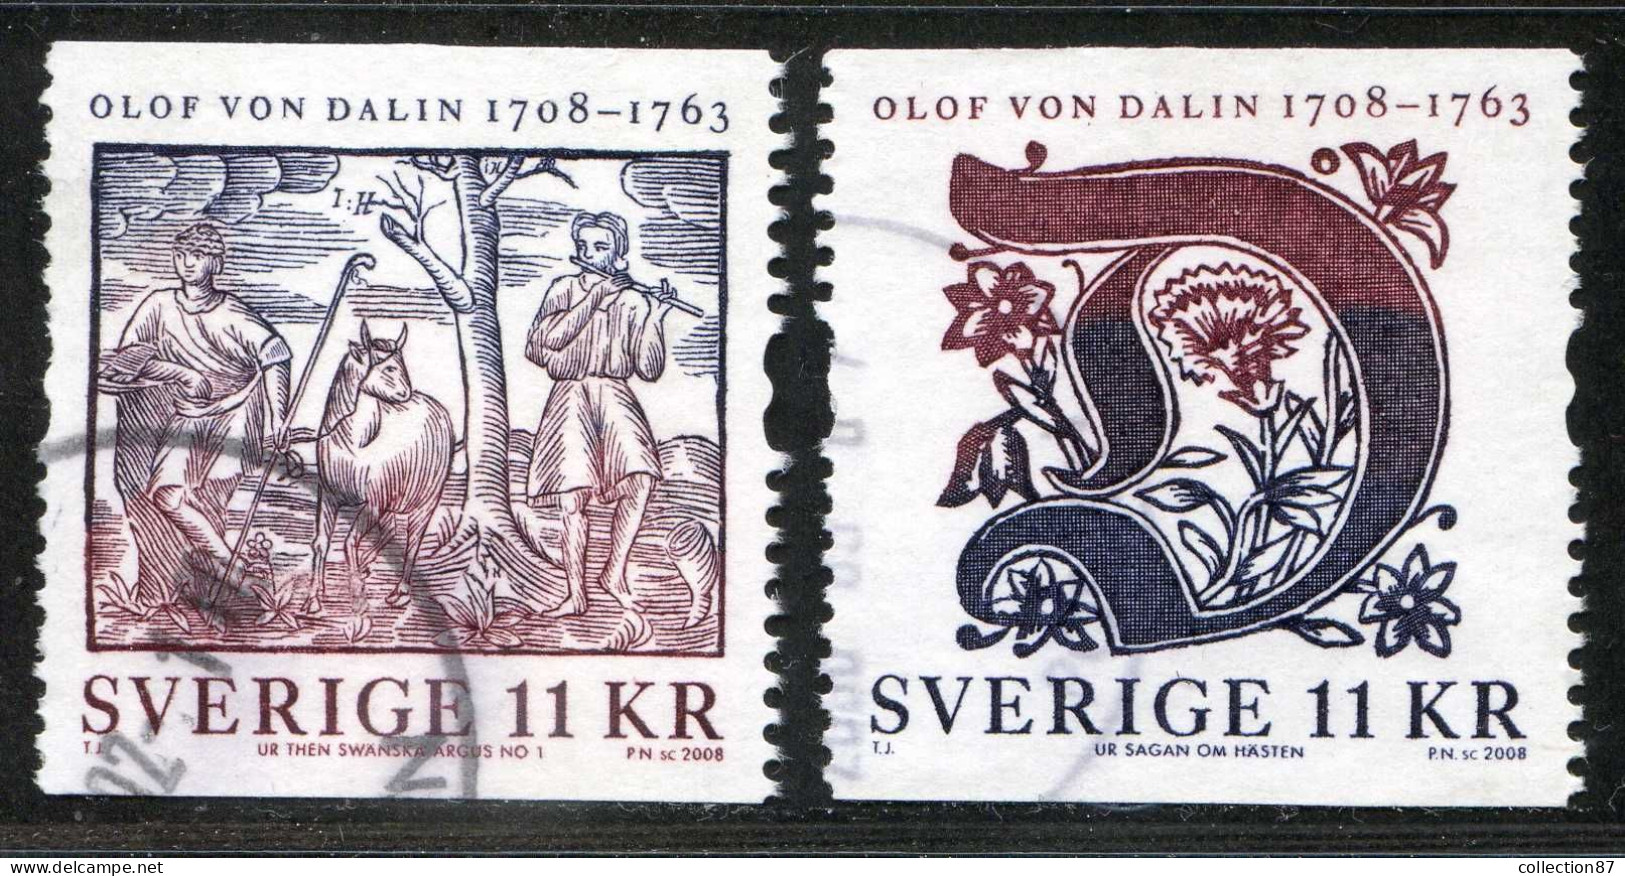 Réf 77 < SUEDE Année 2008 < Yvert N° 2609 à 2610 Ø Used < SWEDEN < Olof Von Dalin > Ecrivain Et Historien - Used Stamps